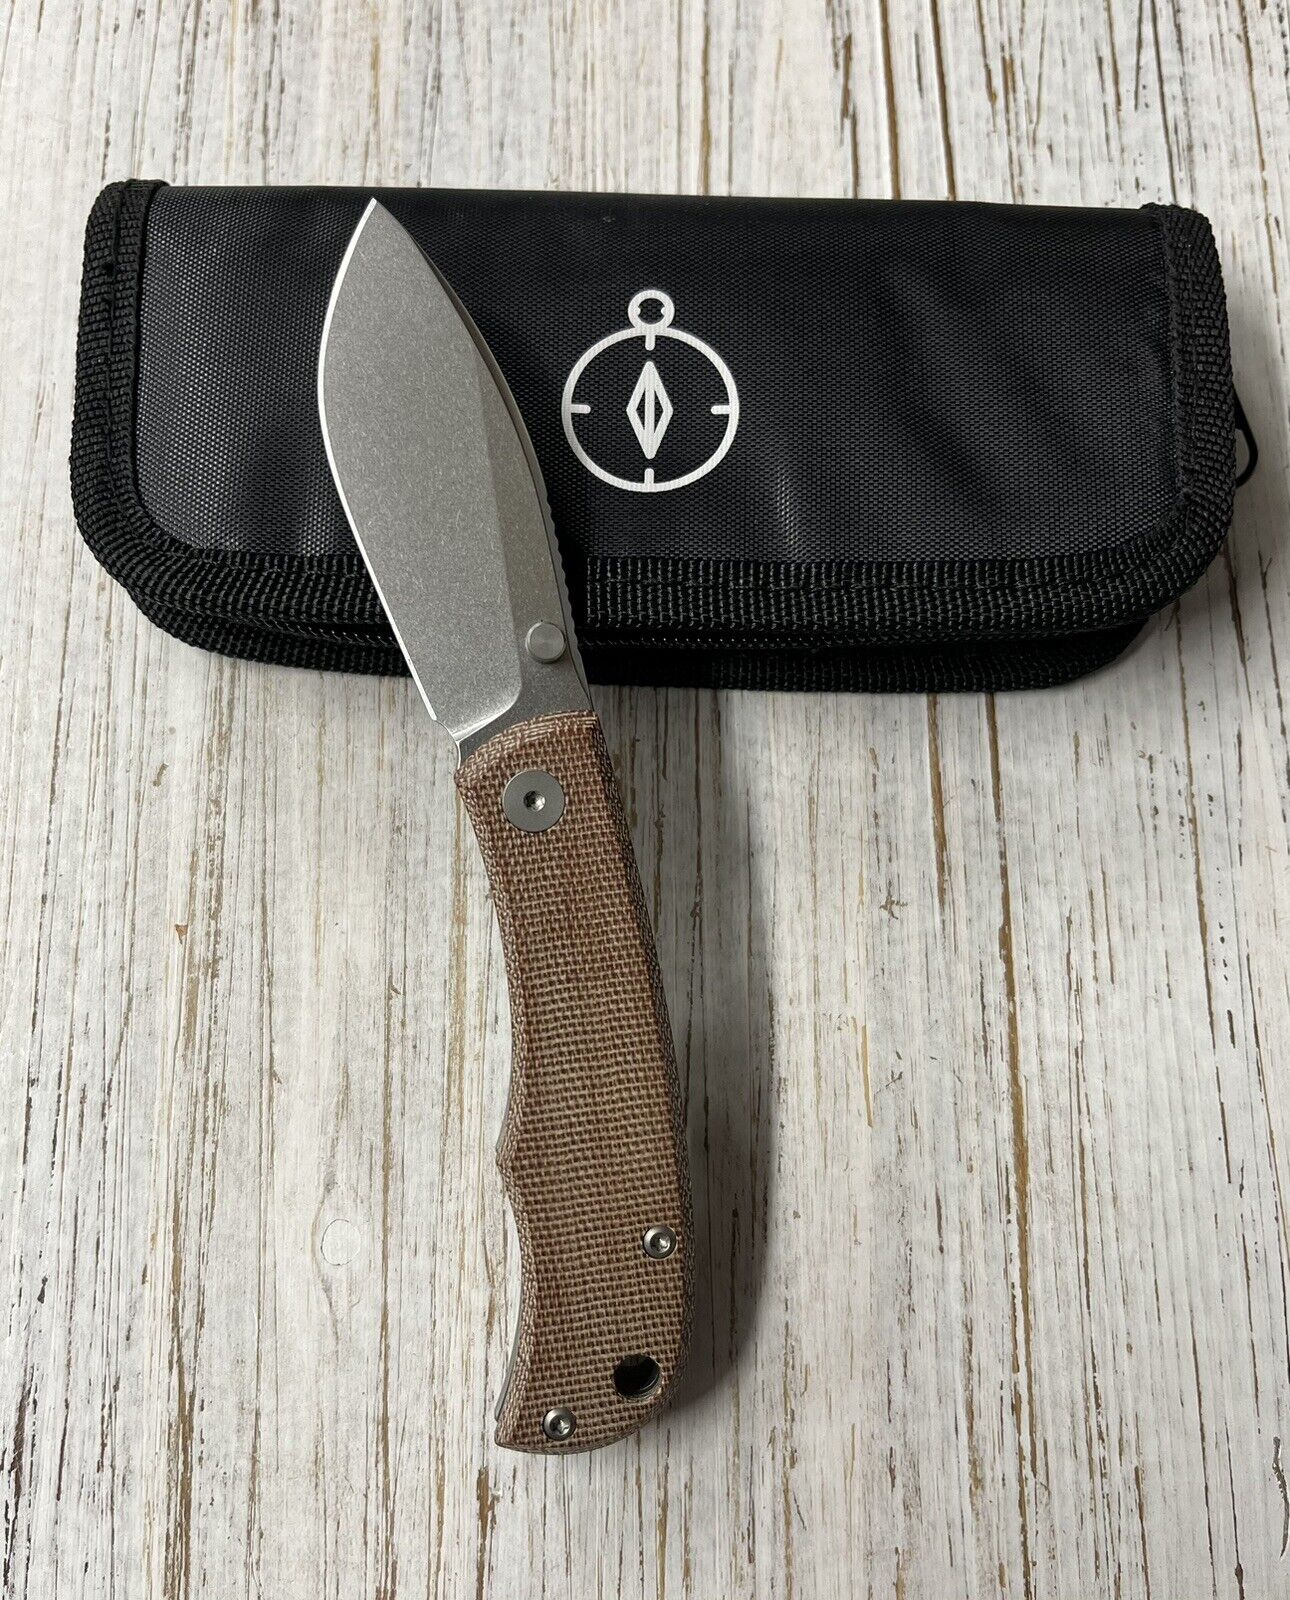 Urban EDC Baby Nessie Knife Natural Micarta Handle M390 Stonewashed Blade